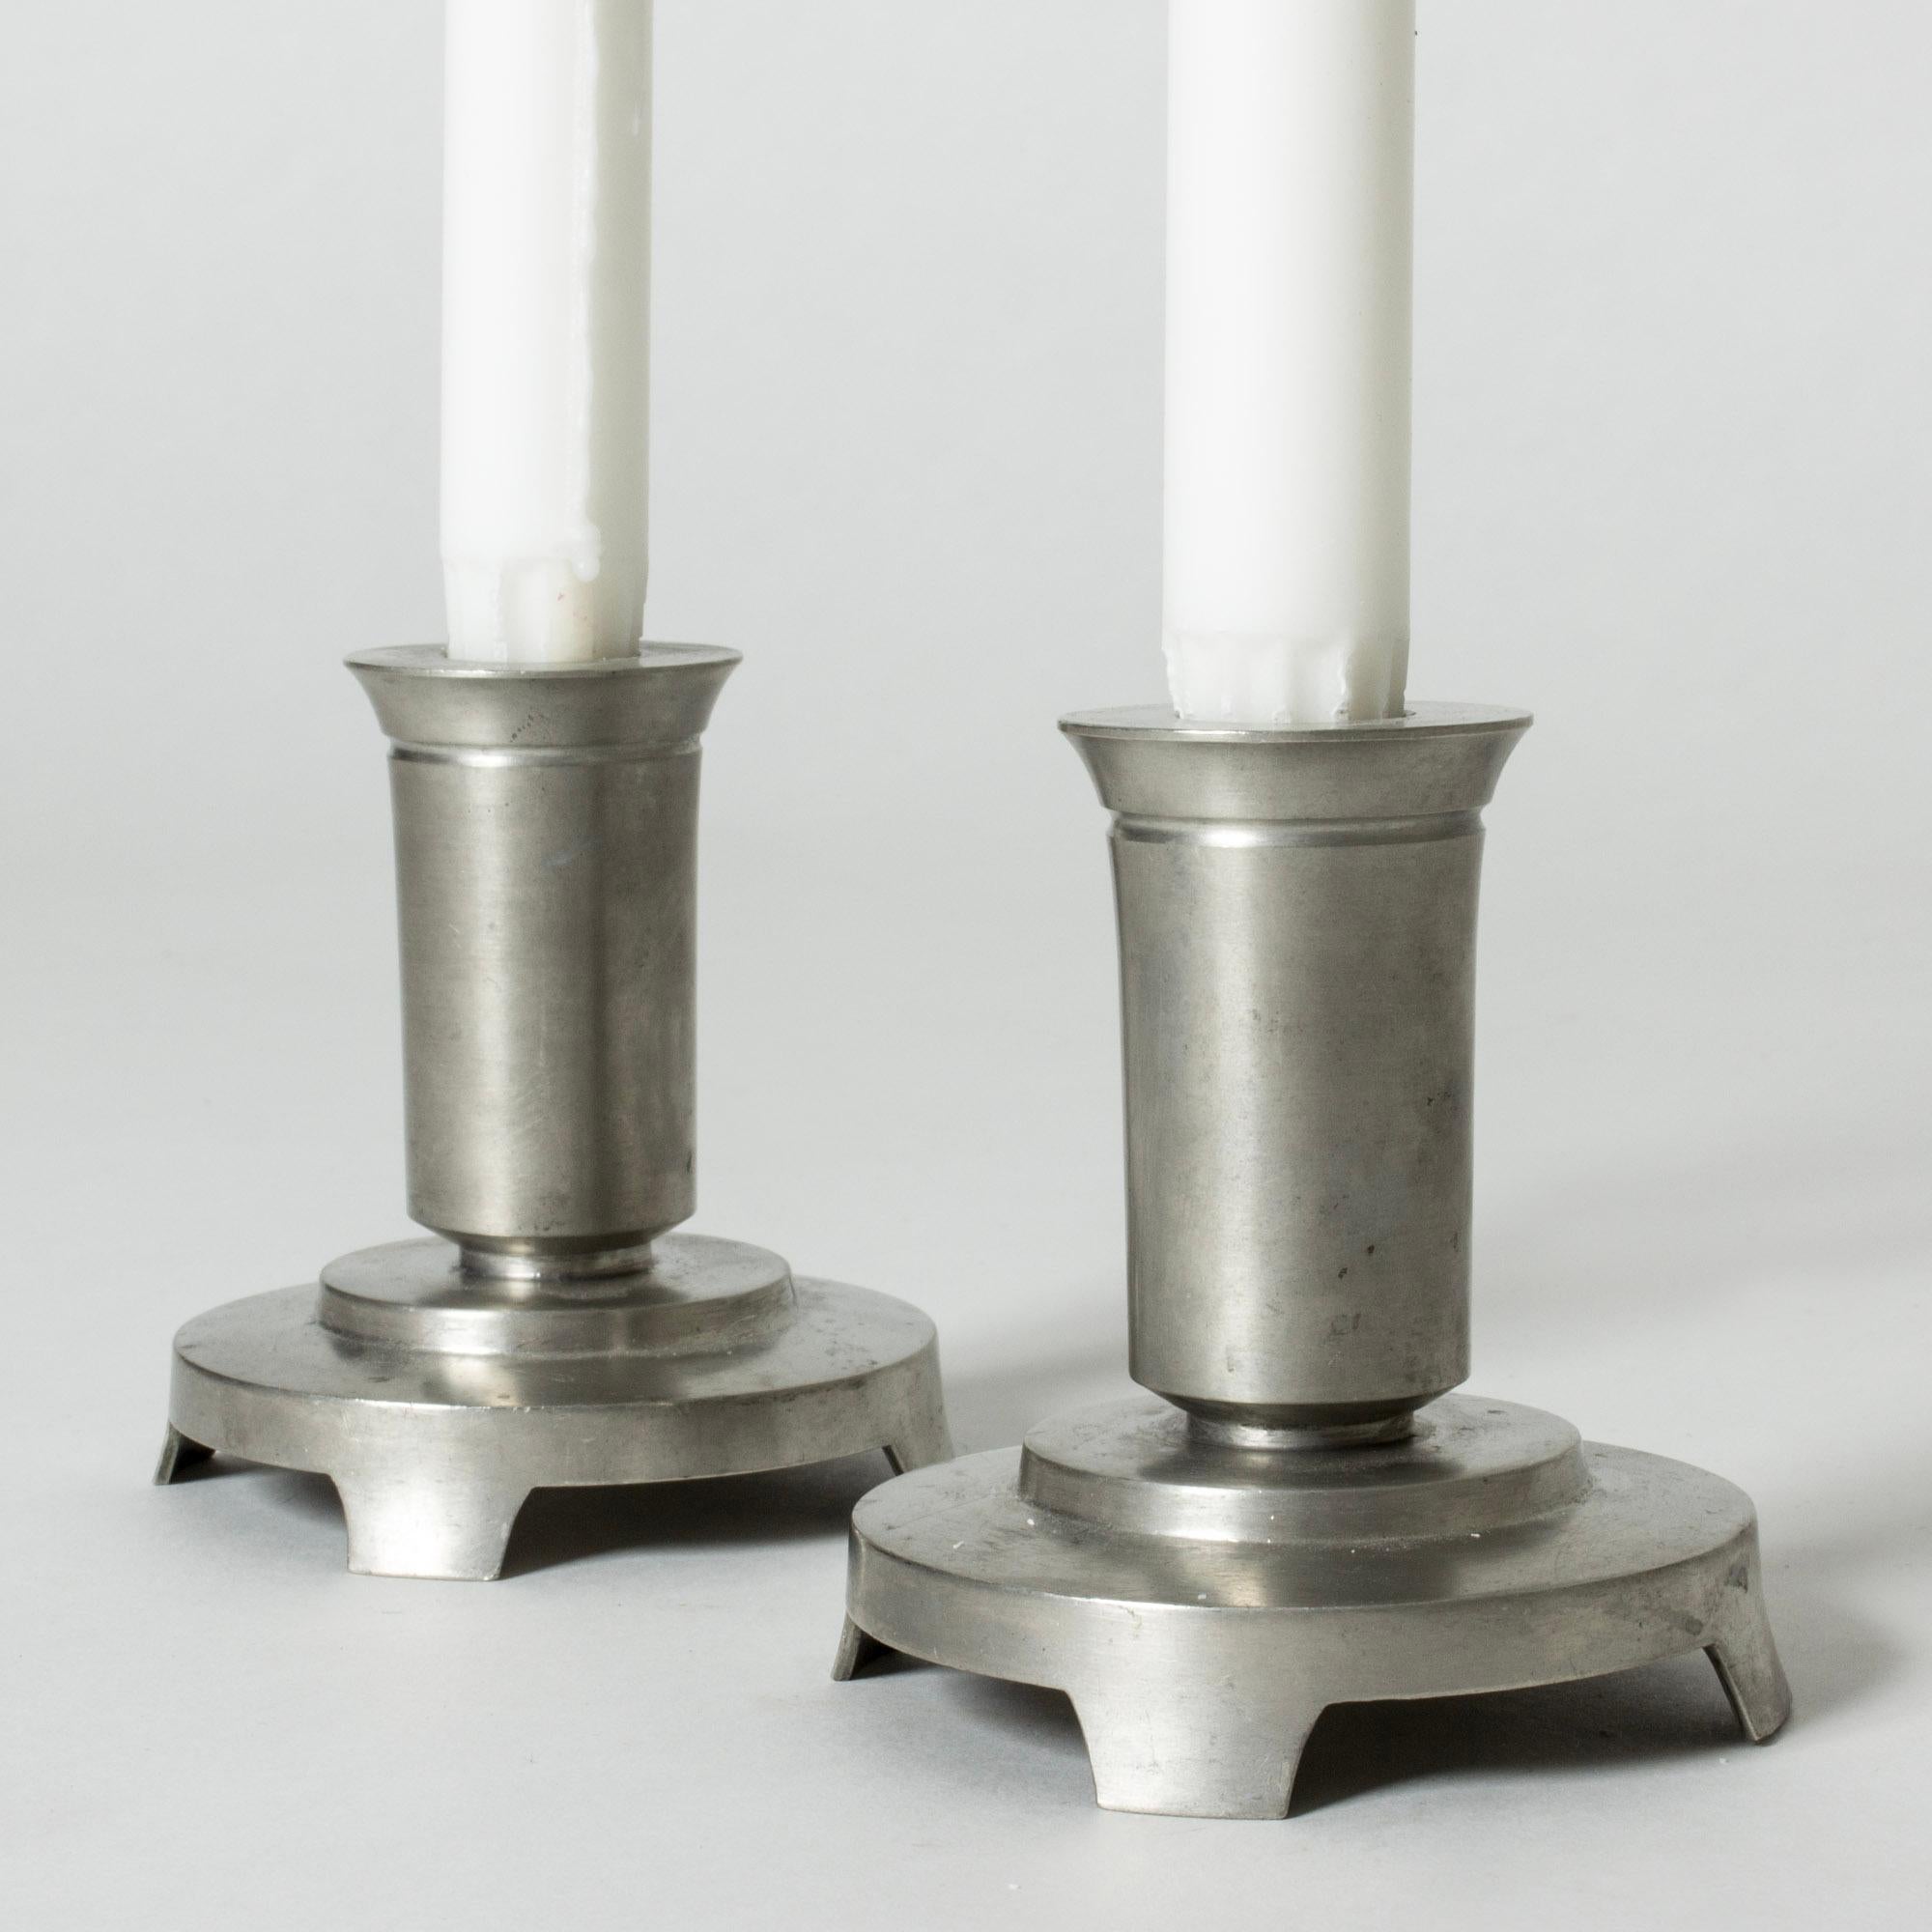 Danish Modernist Pewter Candlesticks from Just Andersen, Denmark, 1930s For Sale